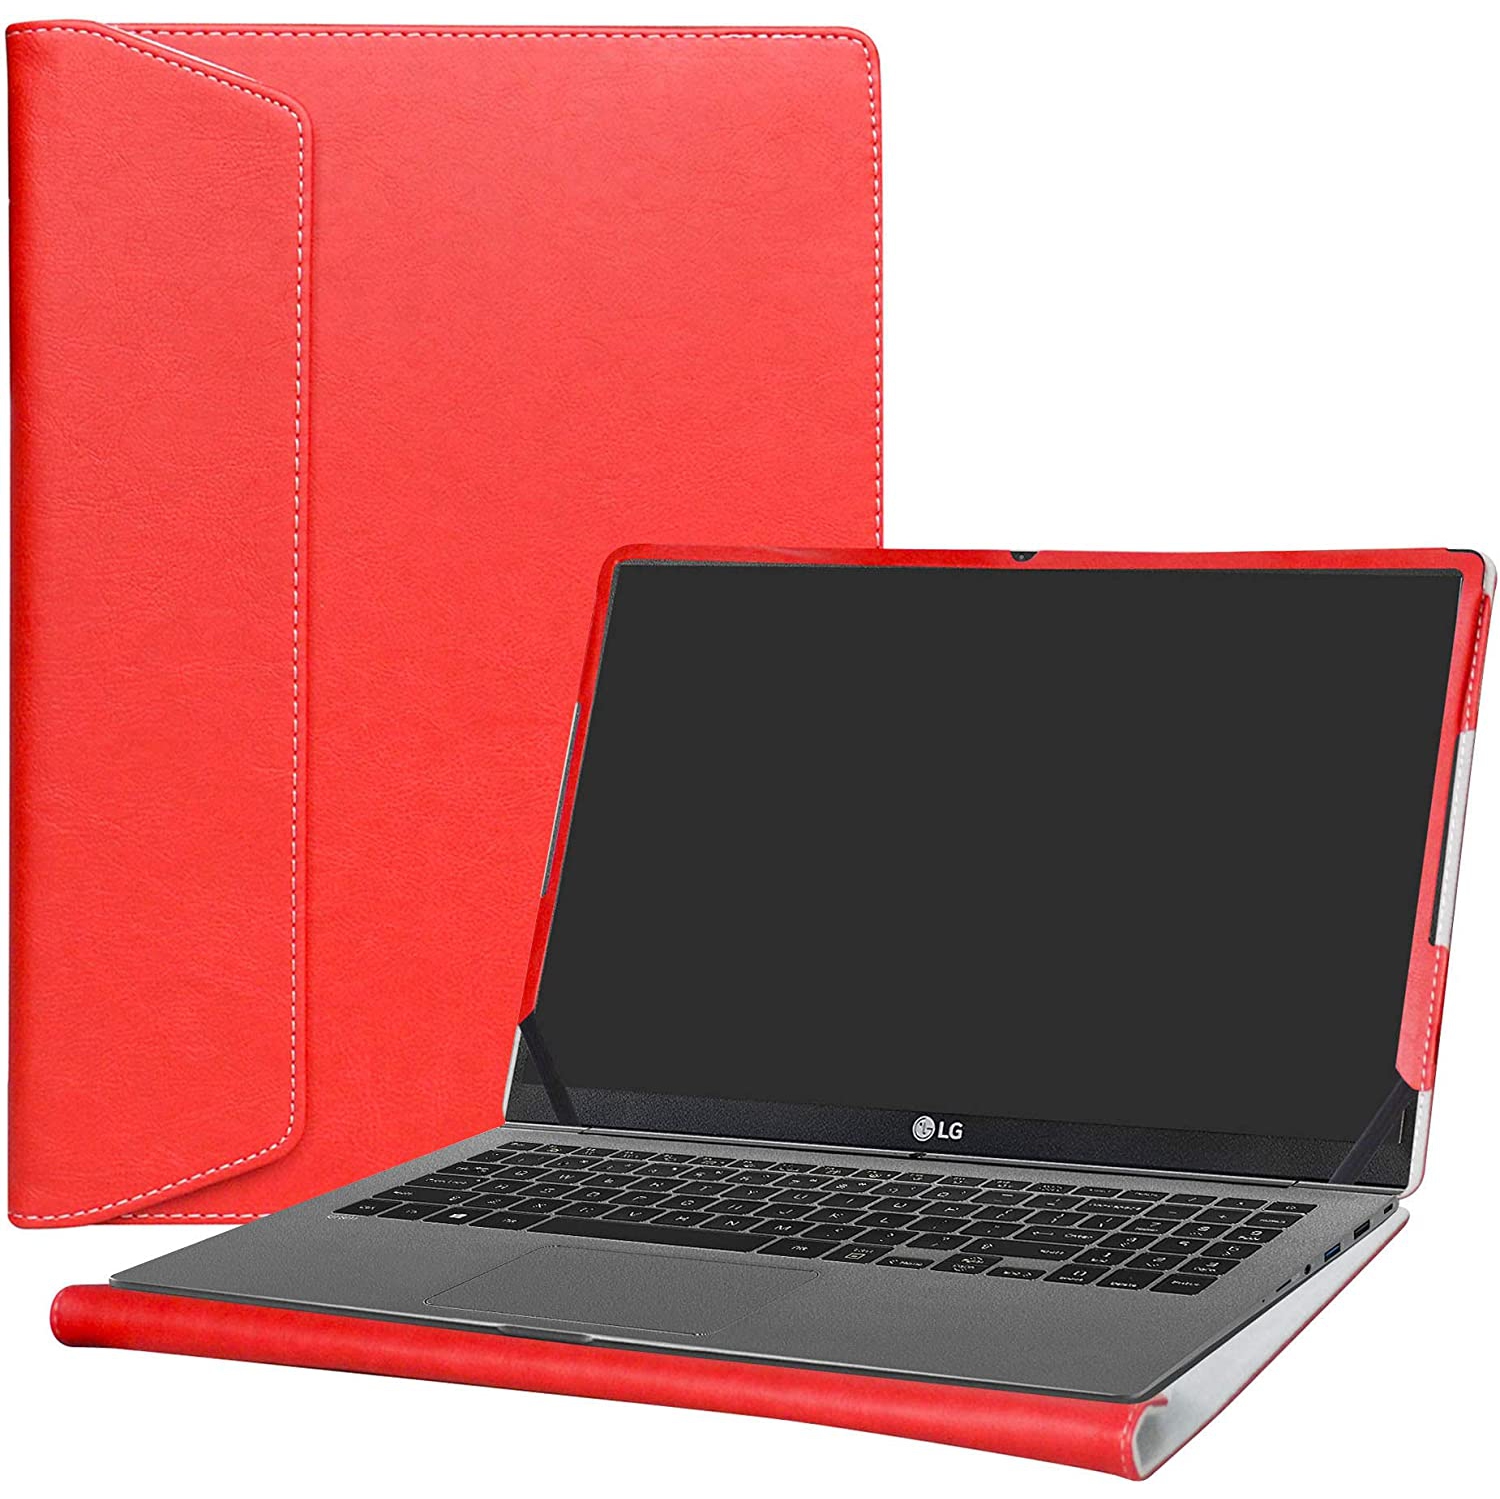 Protective Case Cover for 15.6" LG Gram 15 15Z970 15Z980 15Z990 Series Laptop(Warning:Not Fit LG Gram 15